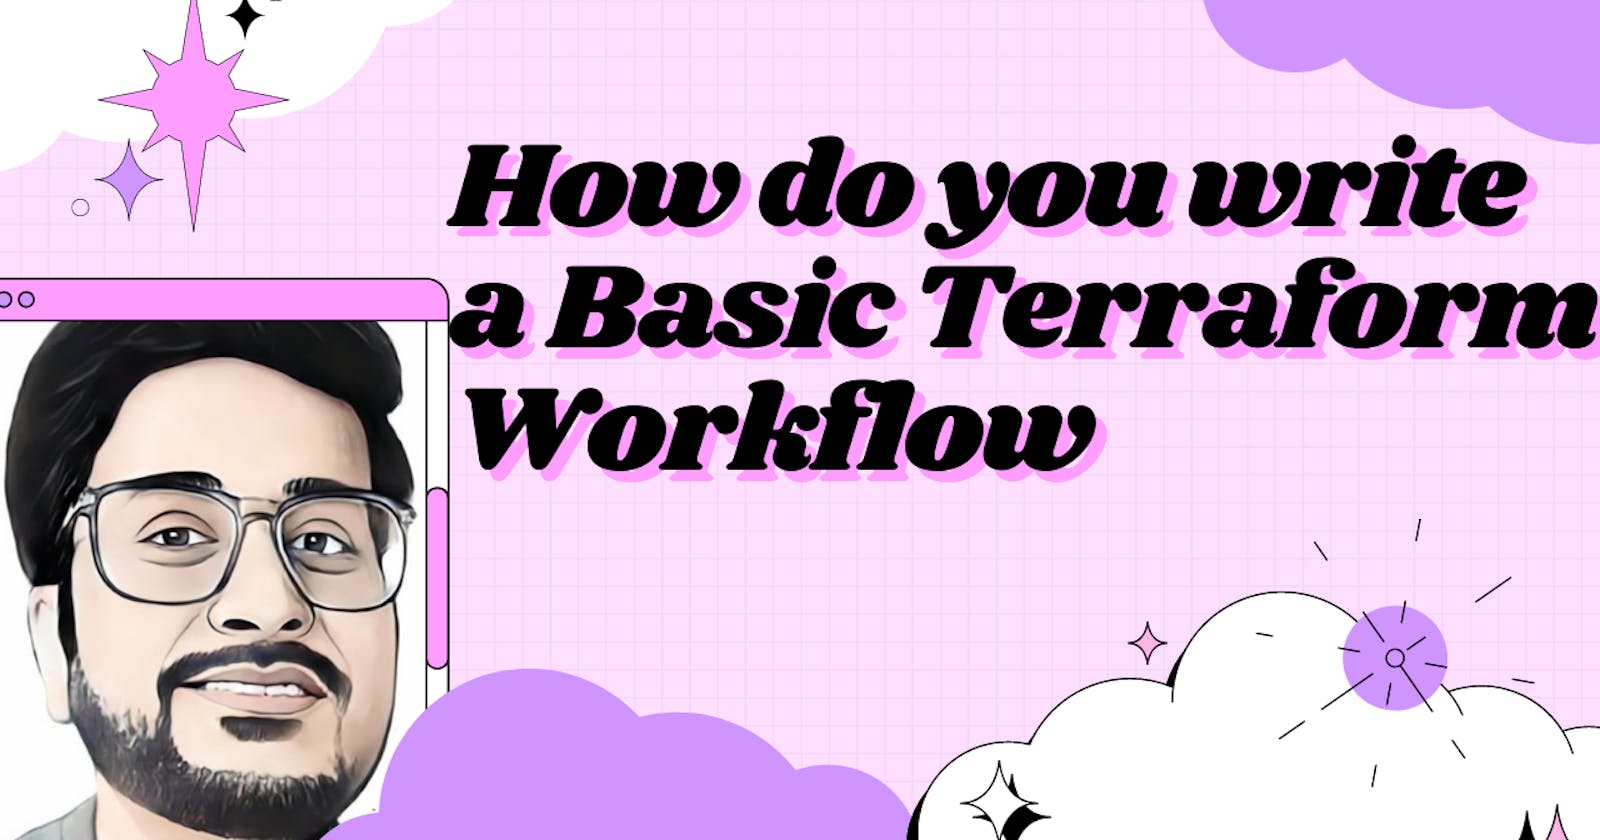 How do you write a Basic Terraform Workflow